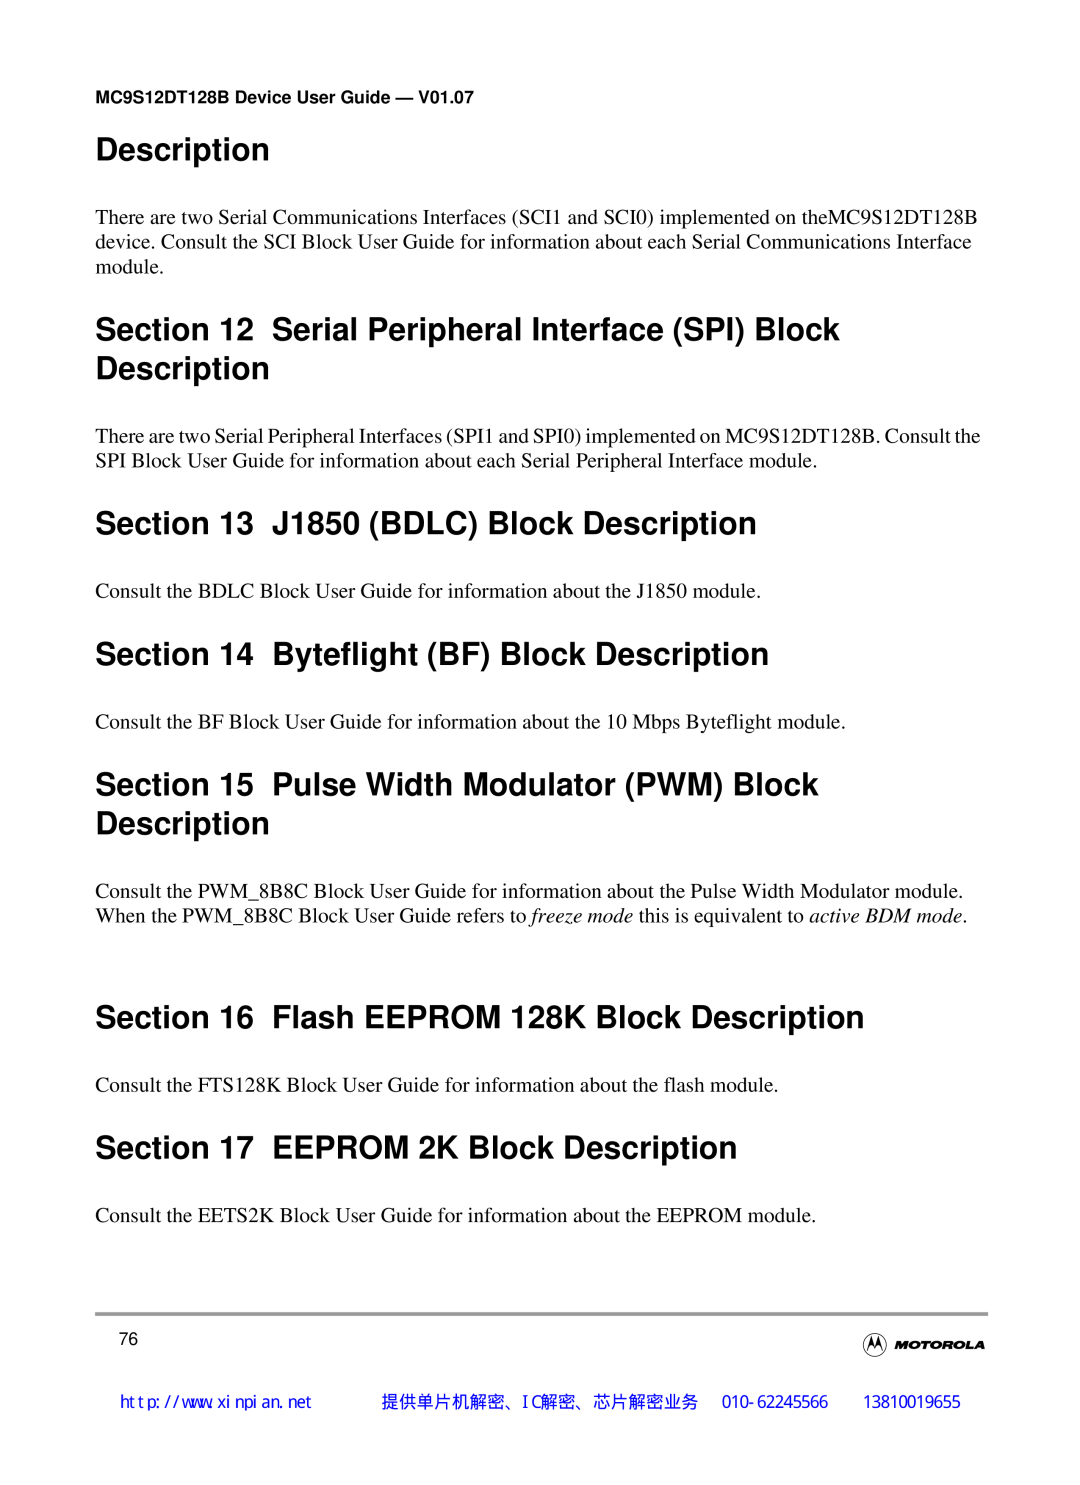 Motorola MC9S12DT128B, MC9S12DB128B Serial Peripheral Interface SPI Block Description, J1850 BDLC Block Description 